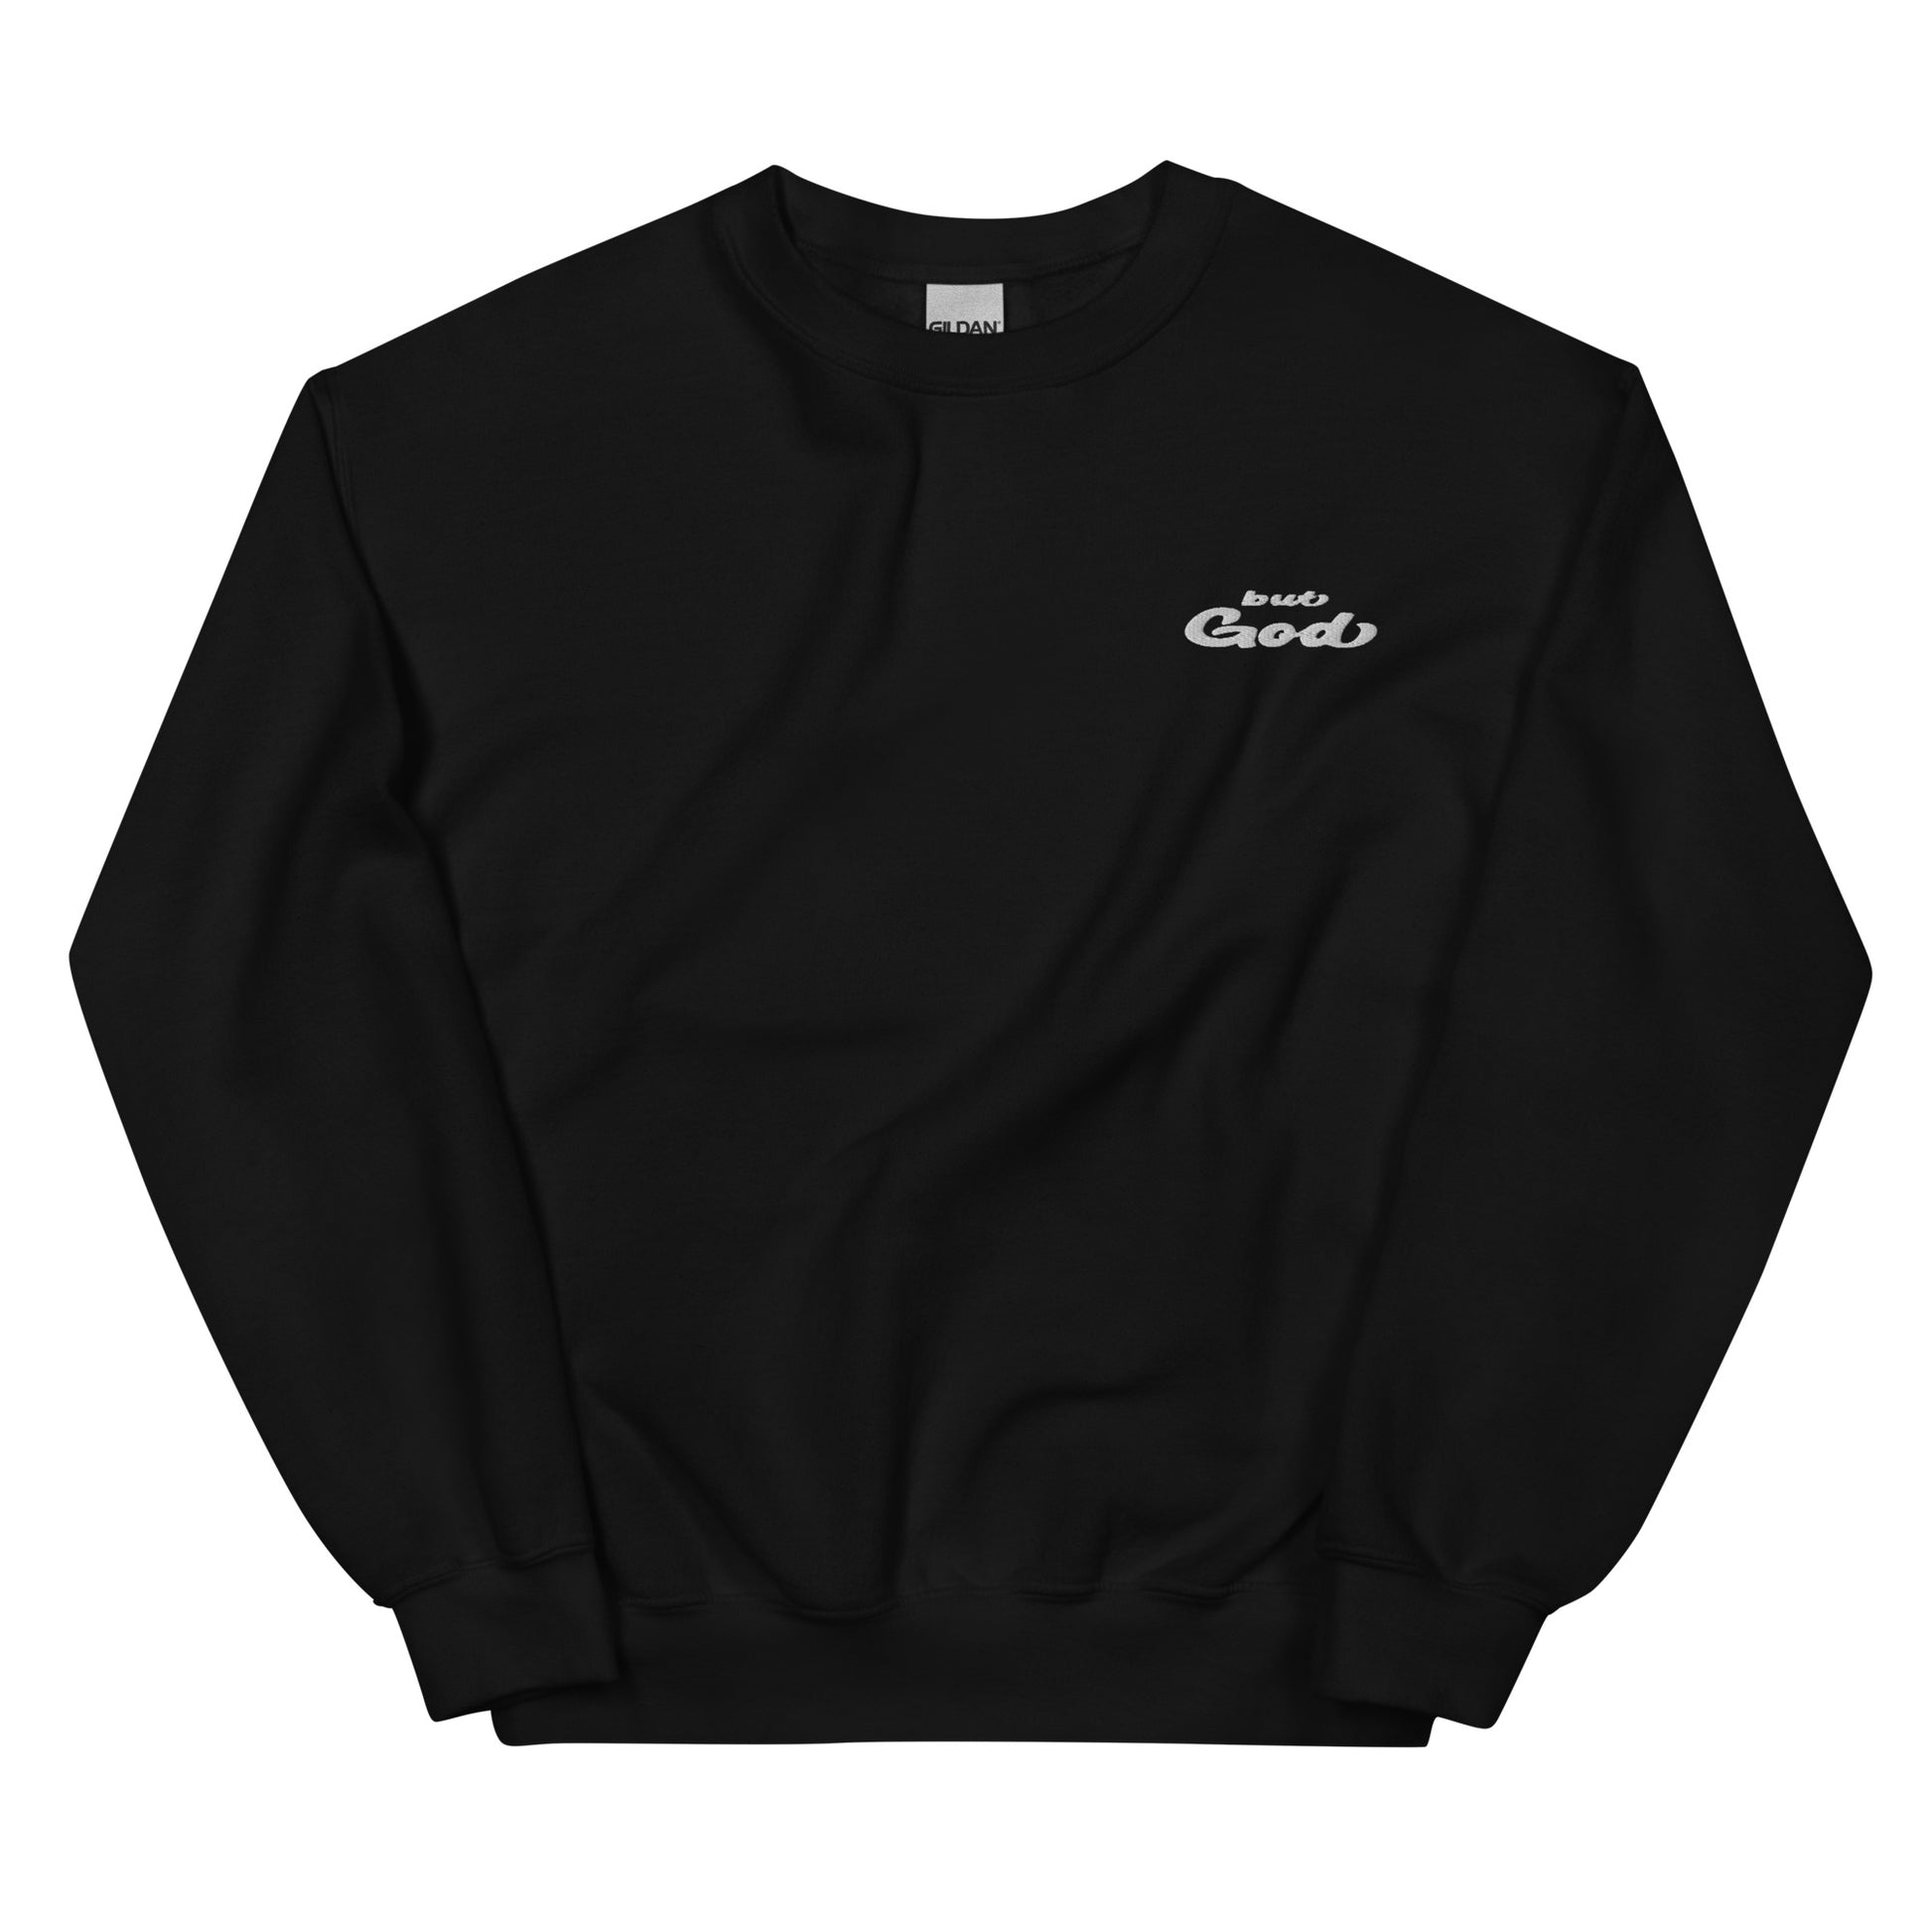 But God Embroidered Unisex Sweatshirt black